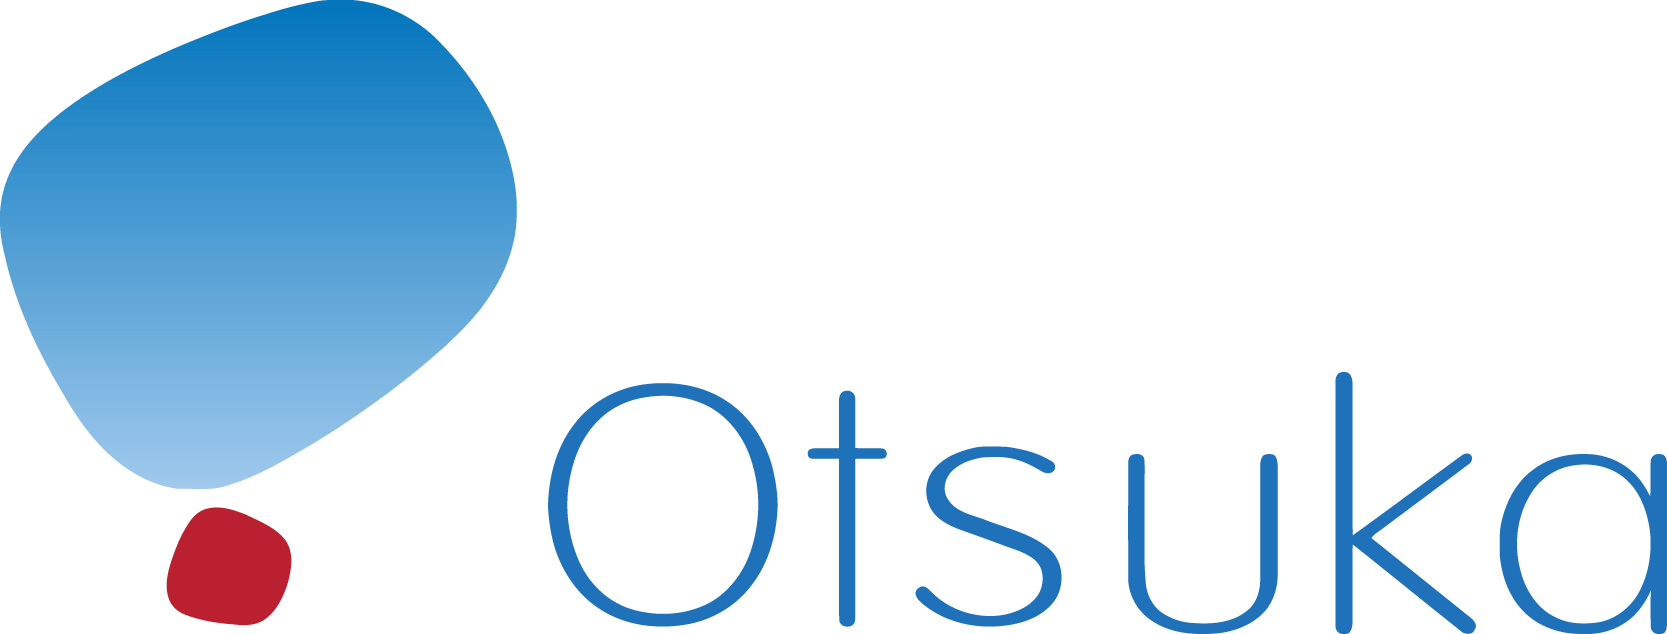 Otsuka Pharmaceuticals Logo